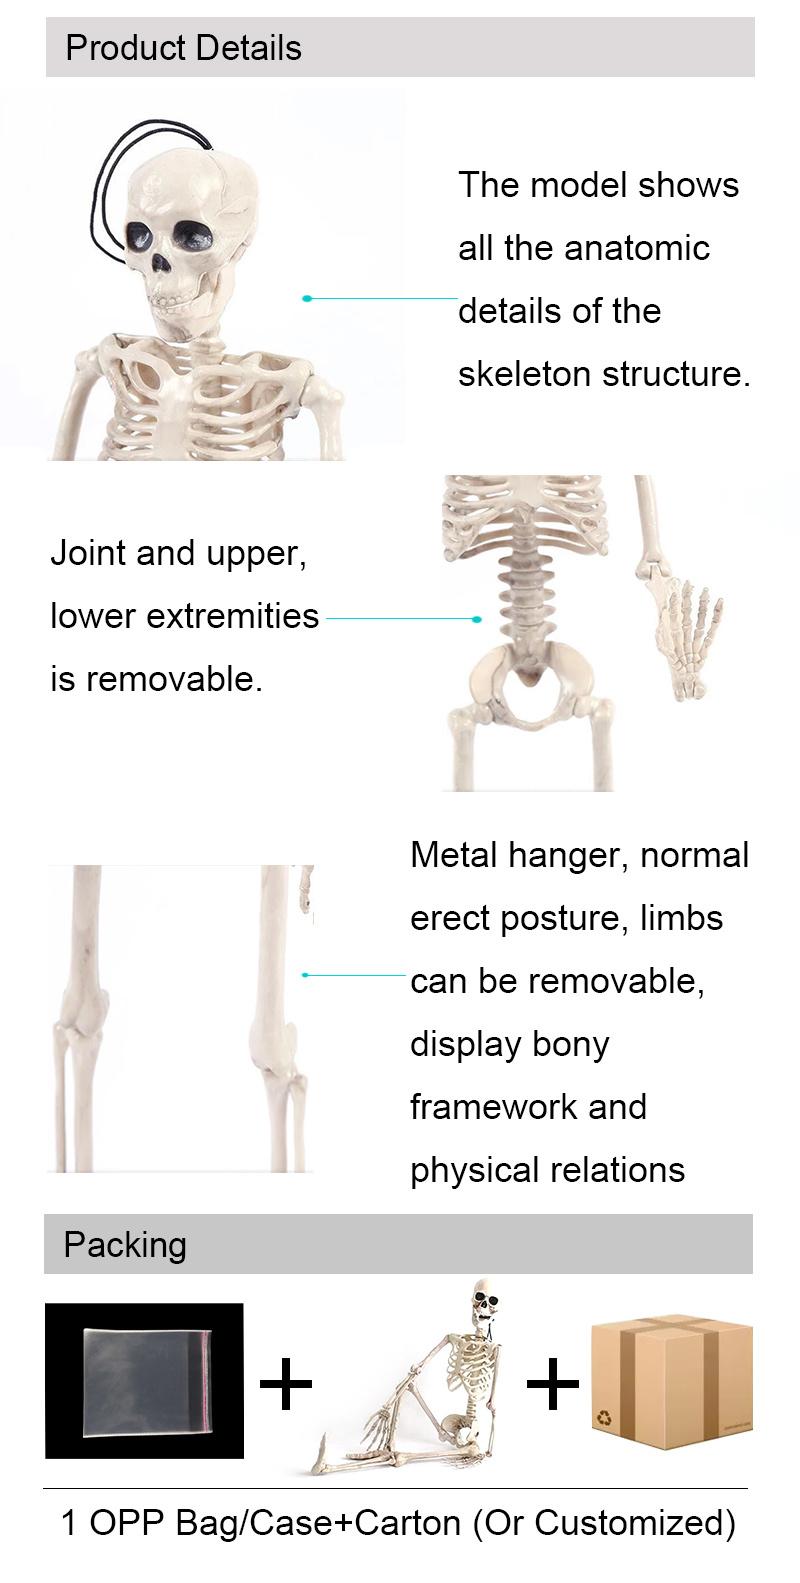 Halloween Anatomical Medical Model 180cm Artificial Human Body Anatomy Skeleton Model